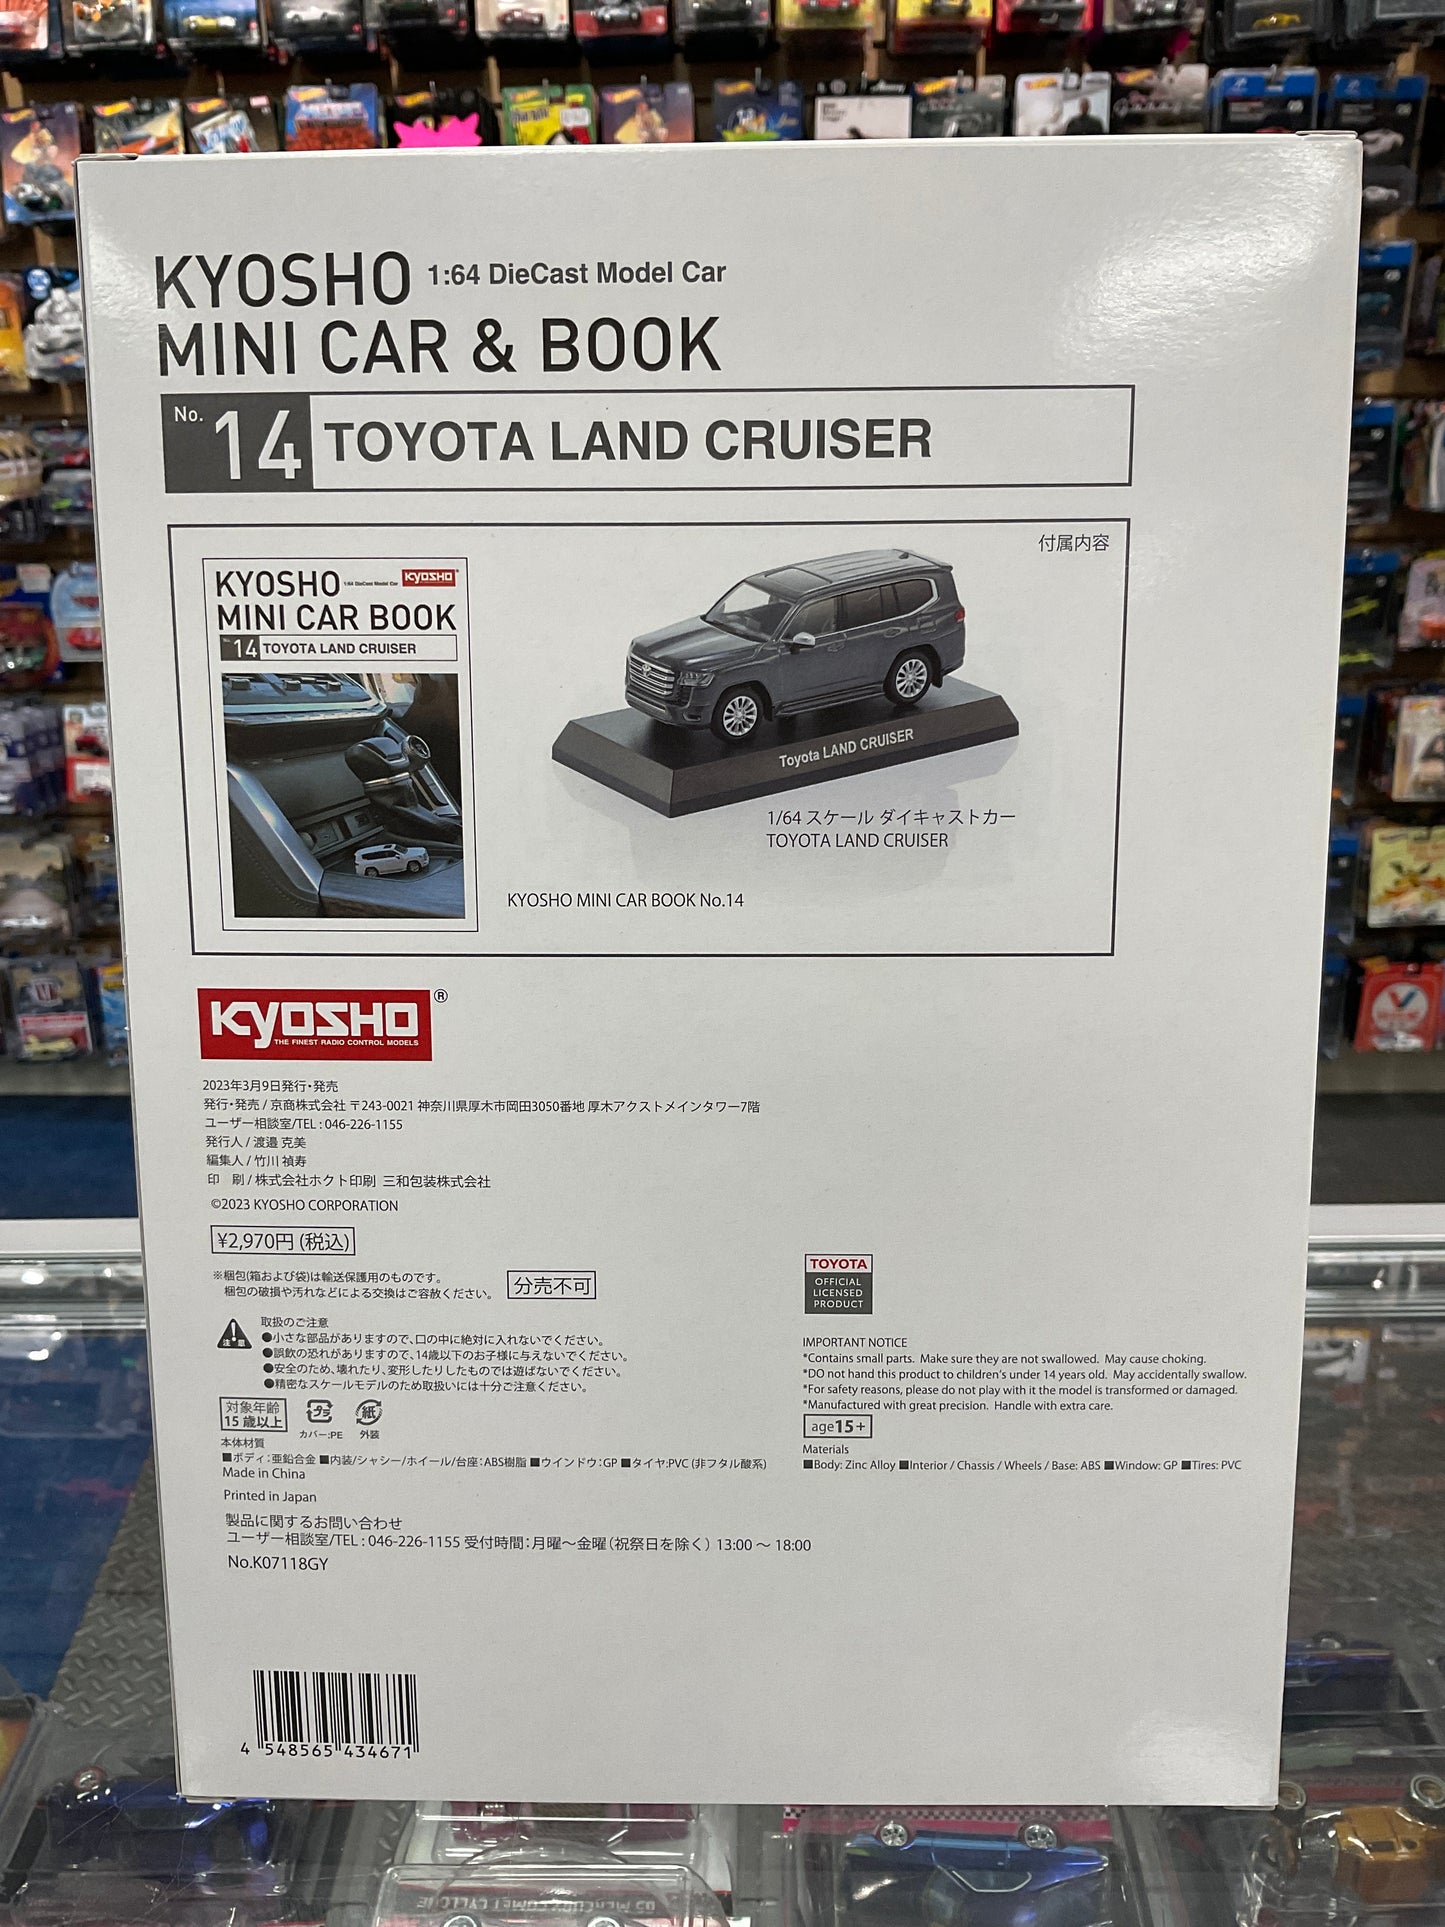 Kyosho mini book & car set #14 Black Toyota Land Cruiser